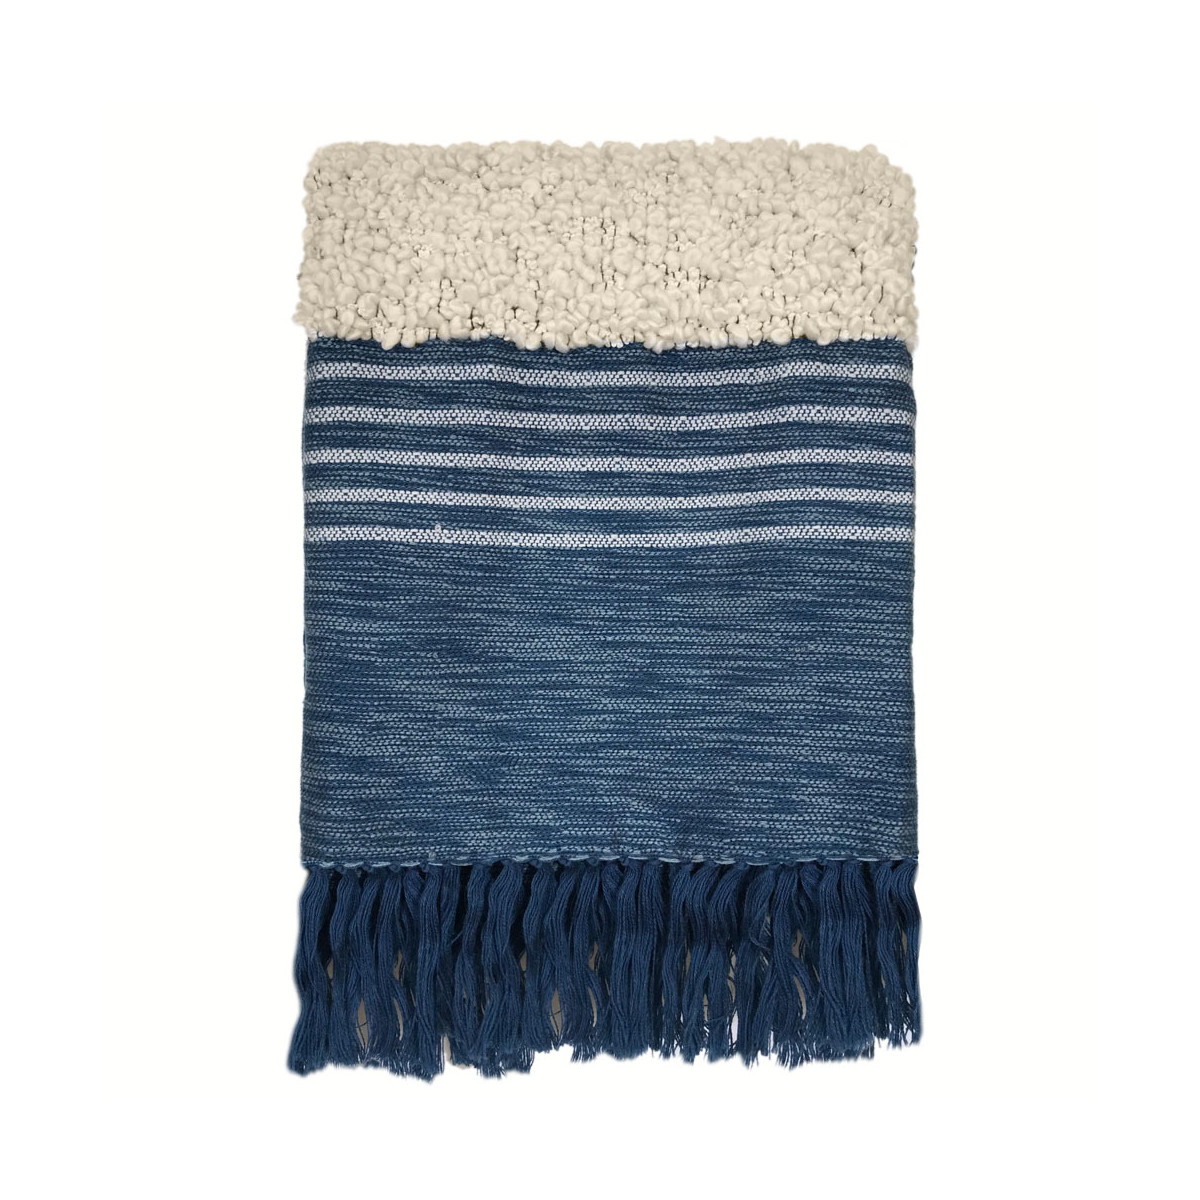 Home Blankets / throws Malagoon Tribal indigo blue throw Blue